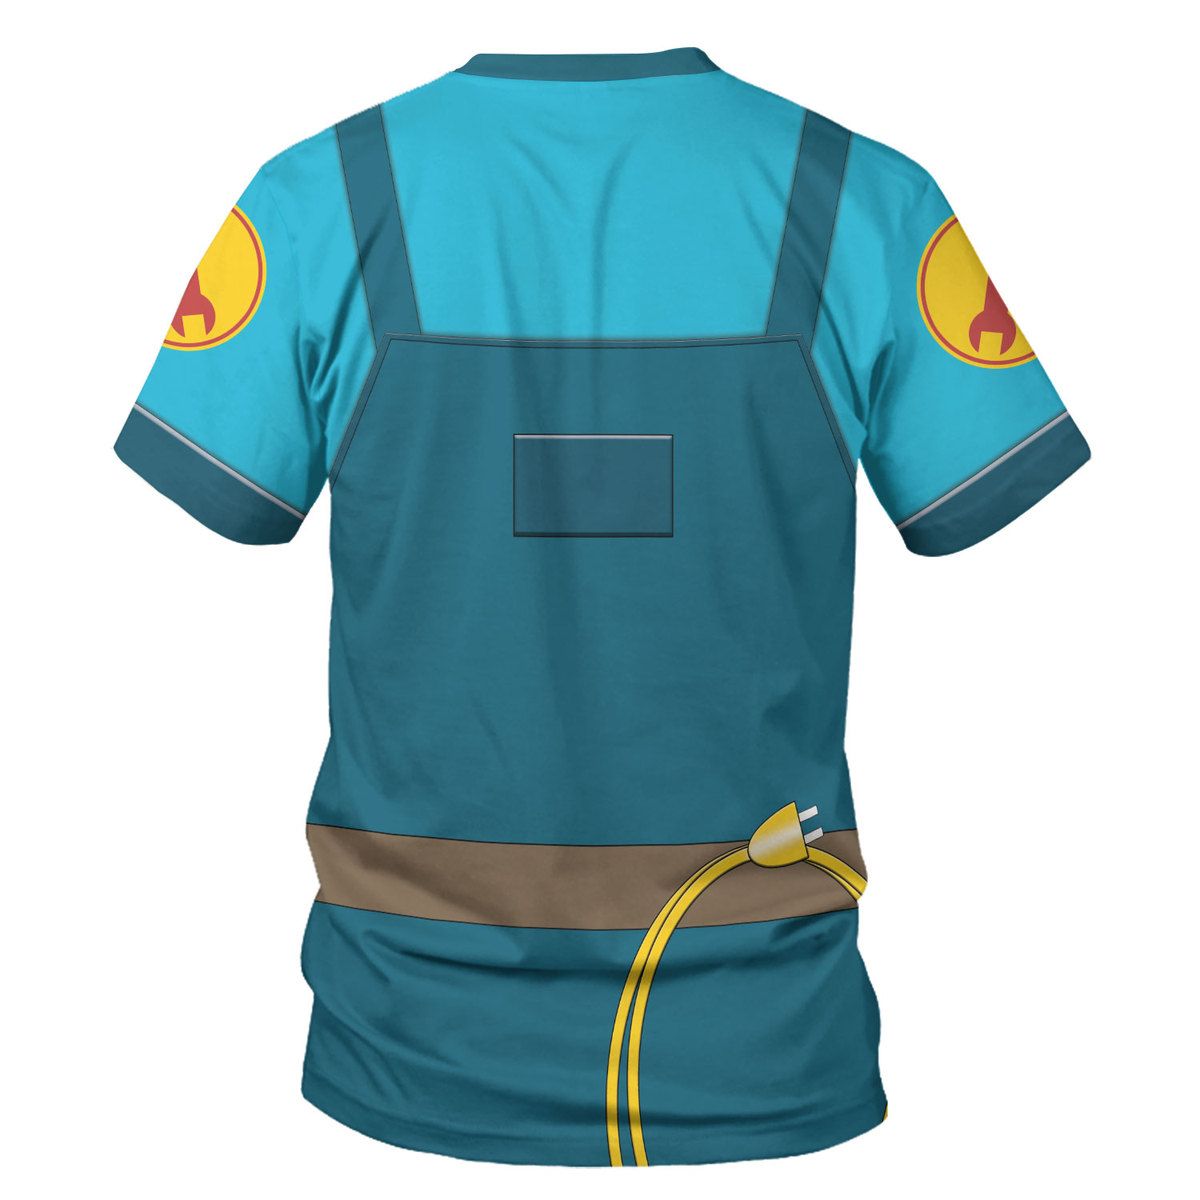 Engineer Blue Team TF2 T-shirt